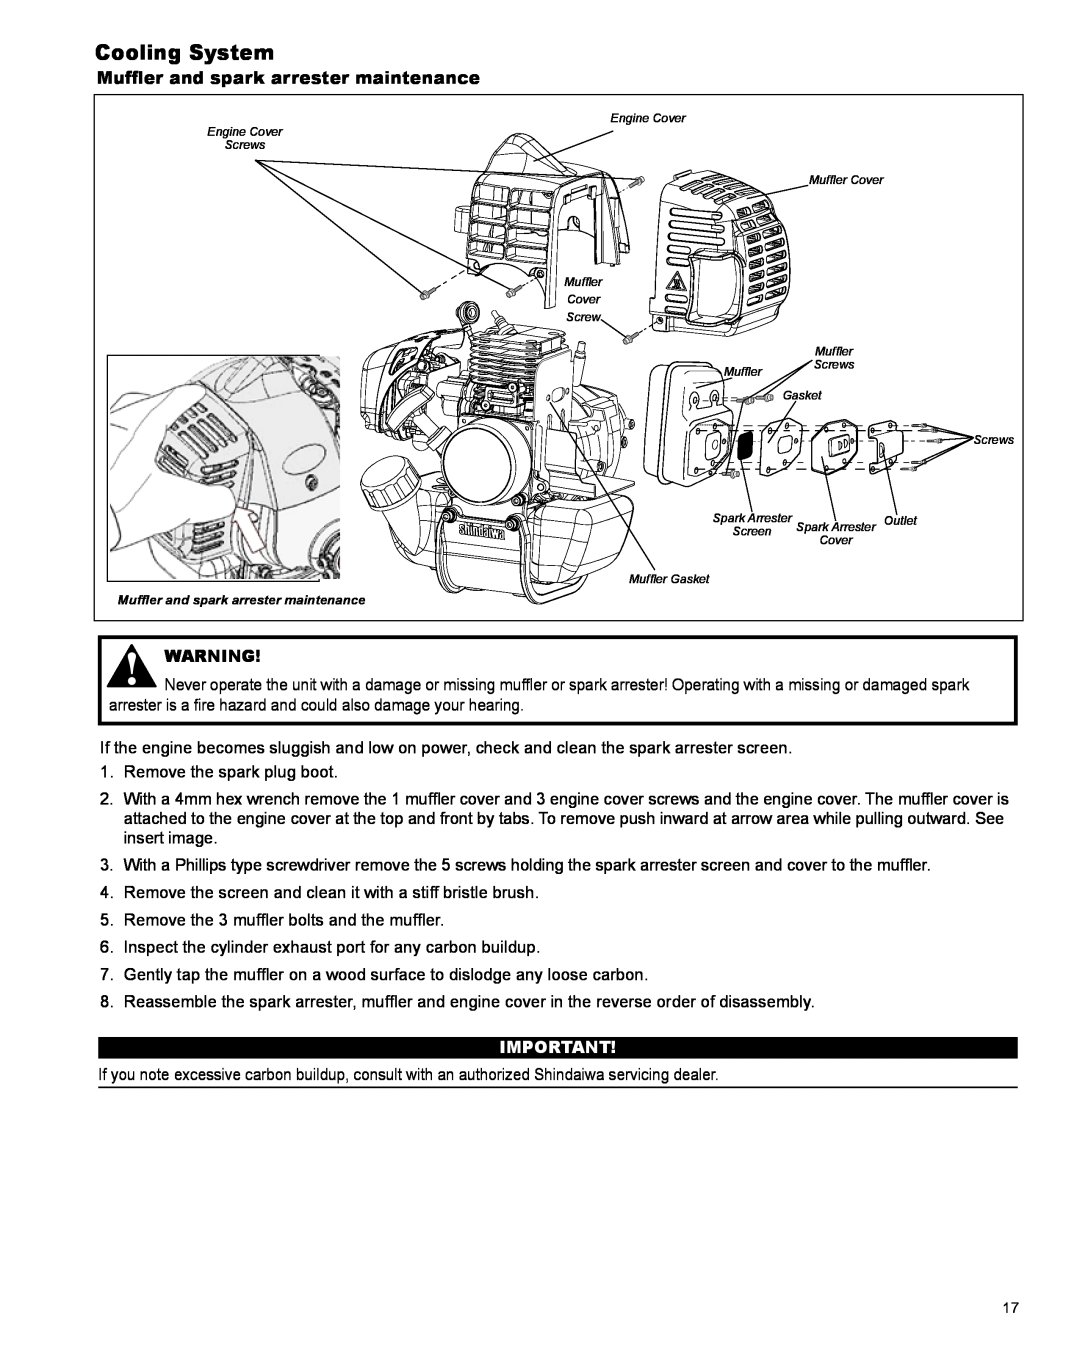 Shindaiwa X7502824801 manual Cooling System, Muffler and spark arrester maintenance 